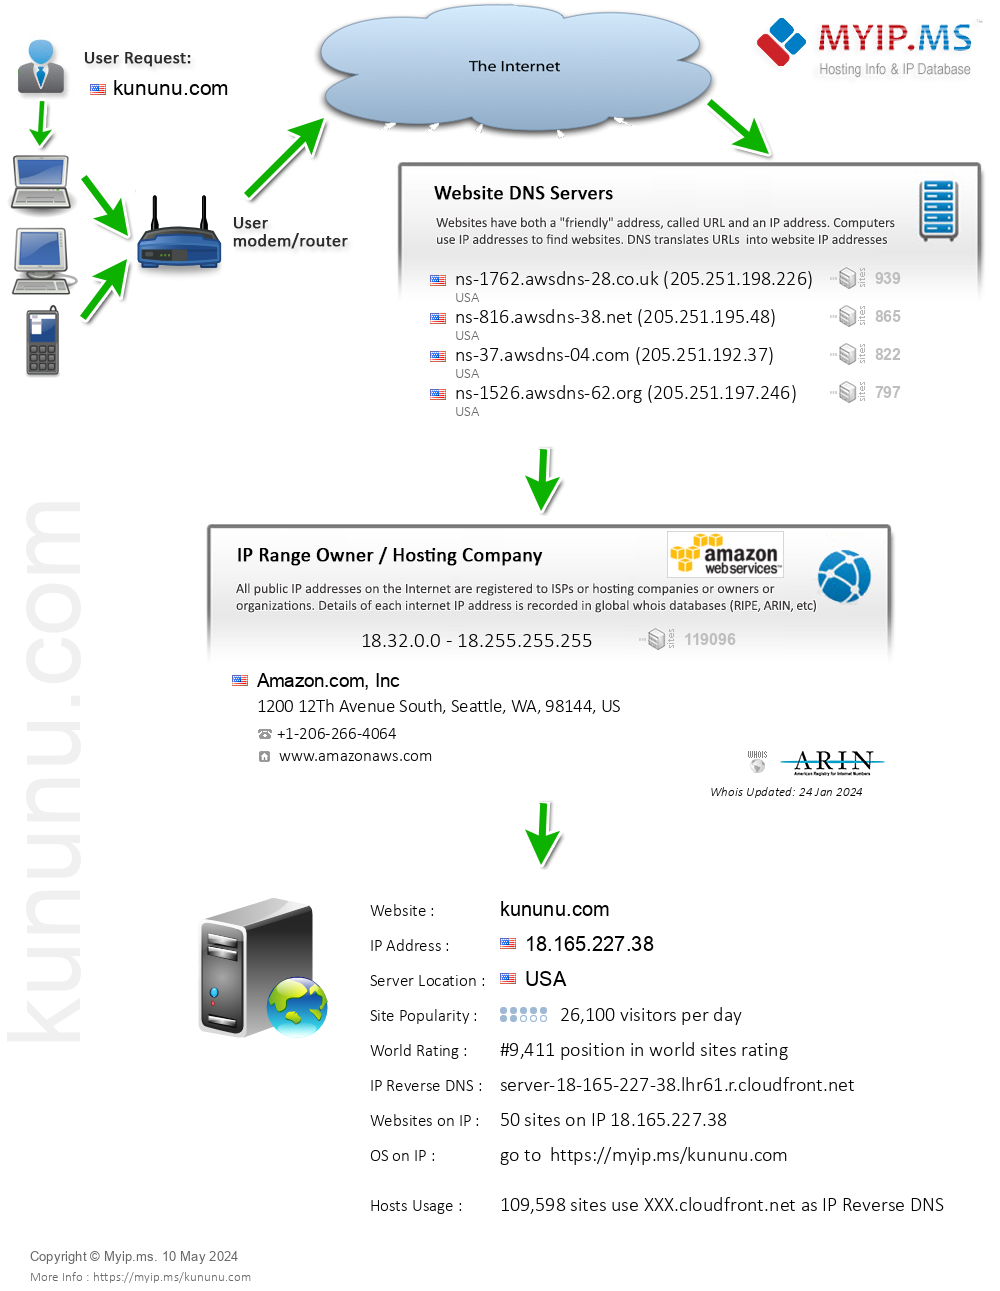 Kununu.com - Website Hosting Visual IP Diagram